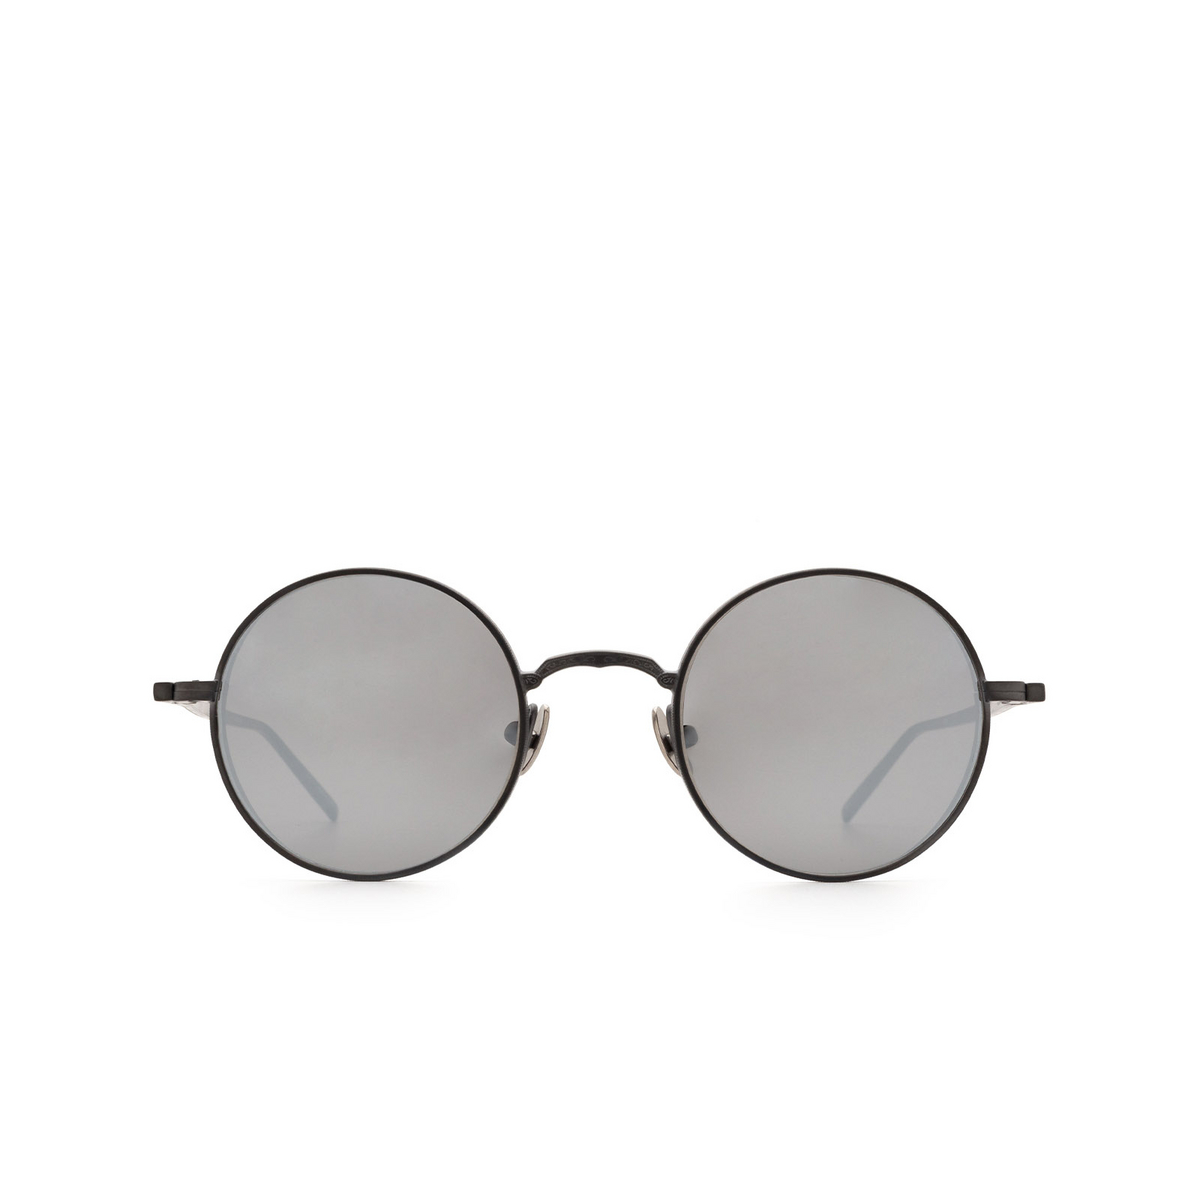 Matsuda® Round Sunglasses: M3087 color Matte Black Mbk - front view.